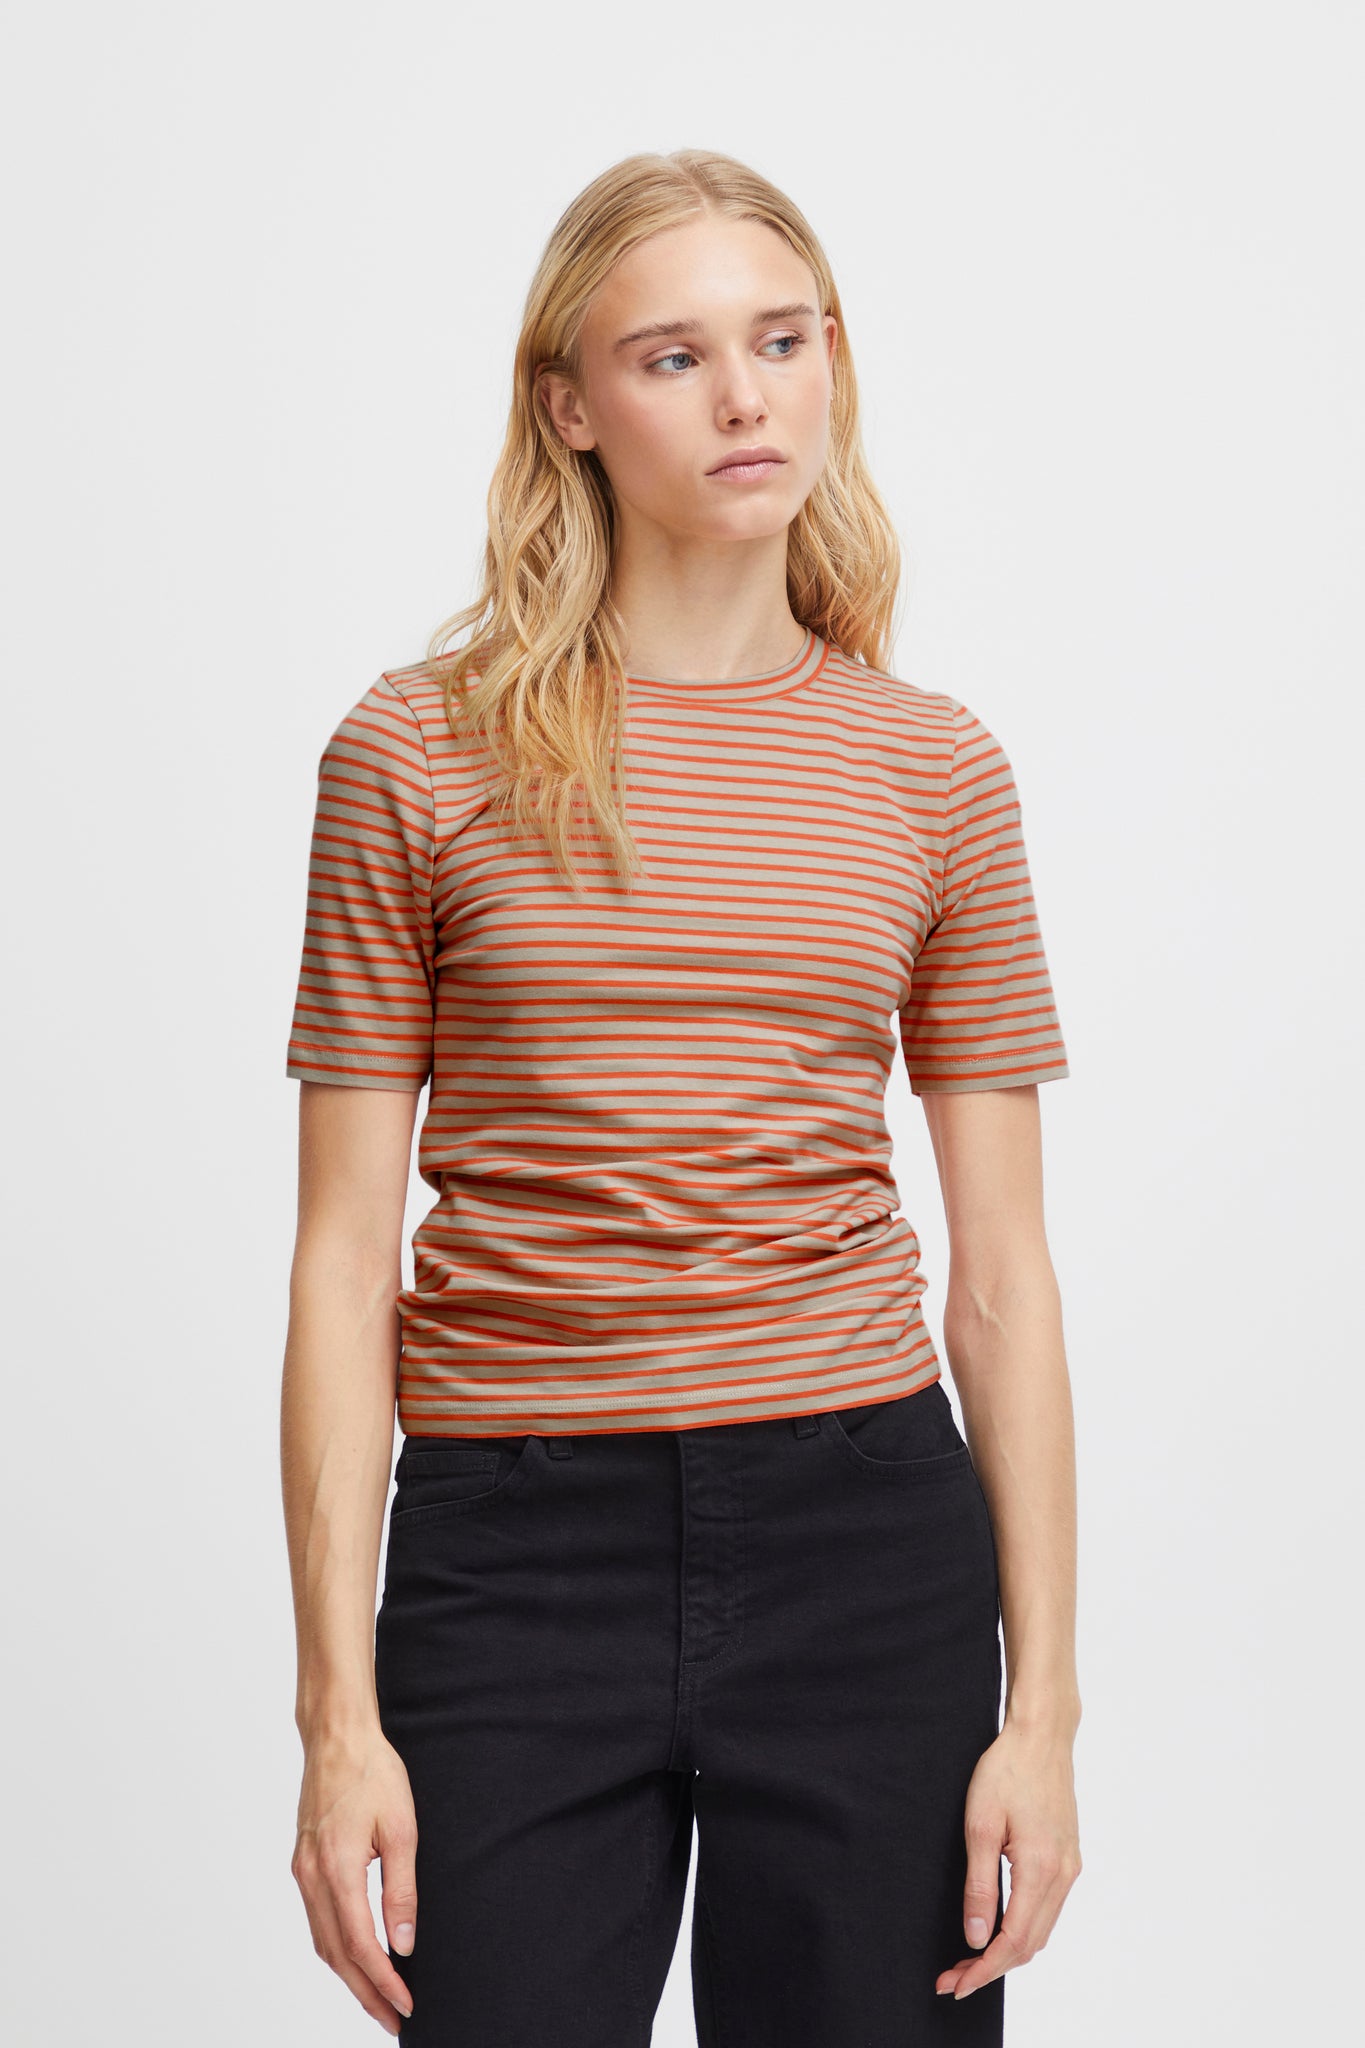 Camiseta ICHI Mira Hot Coral Stripes